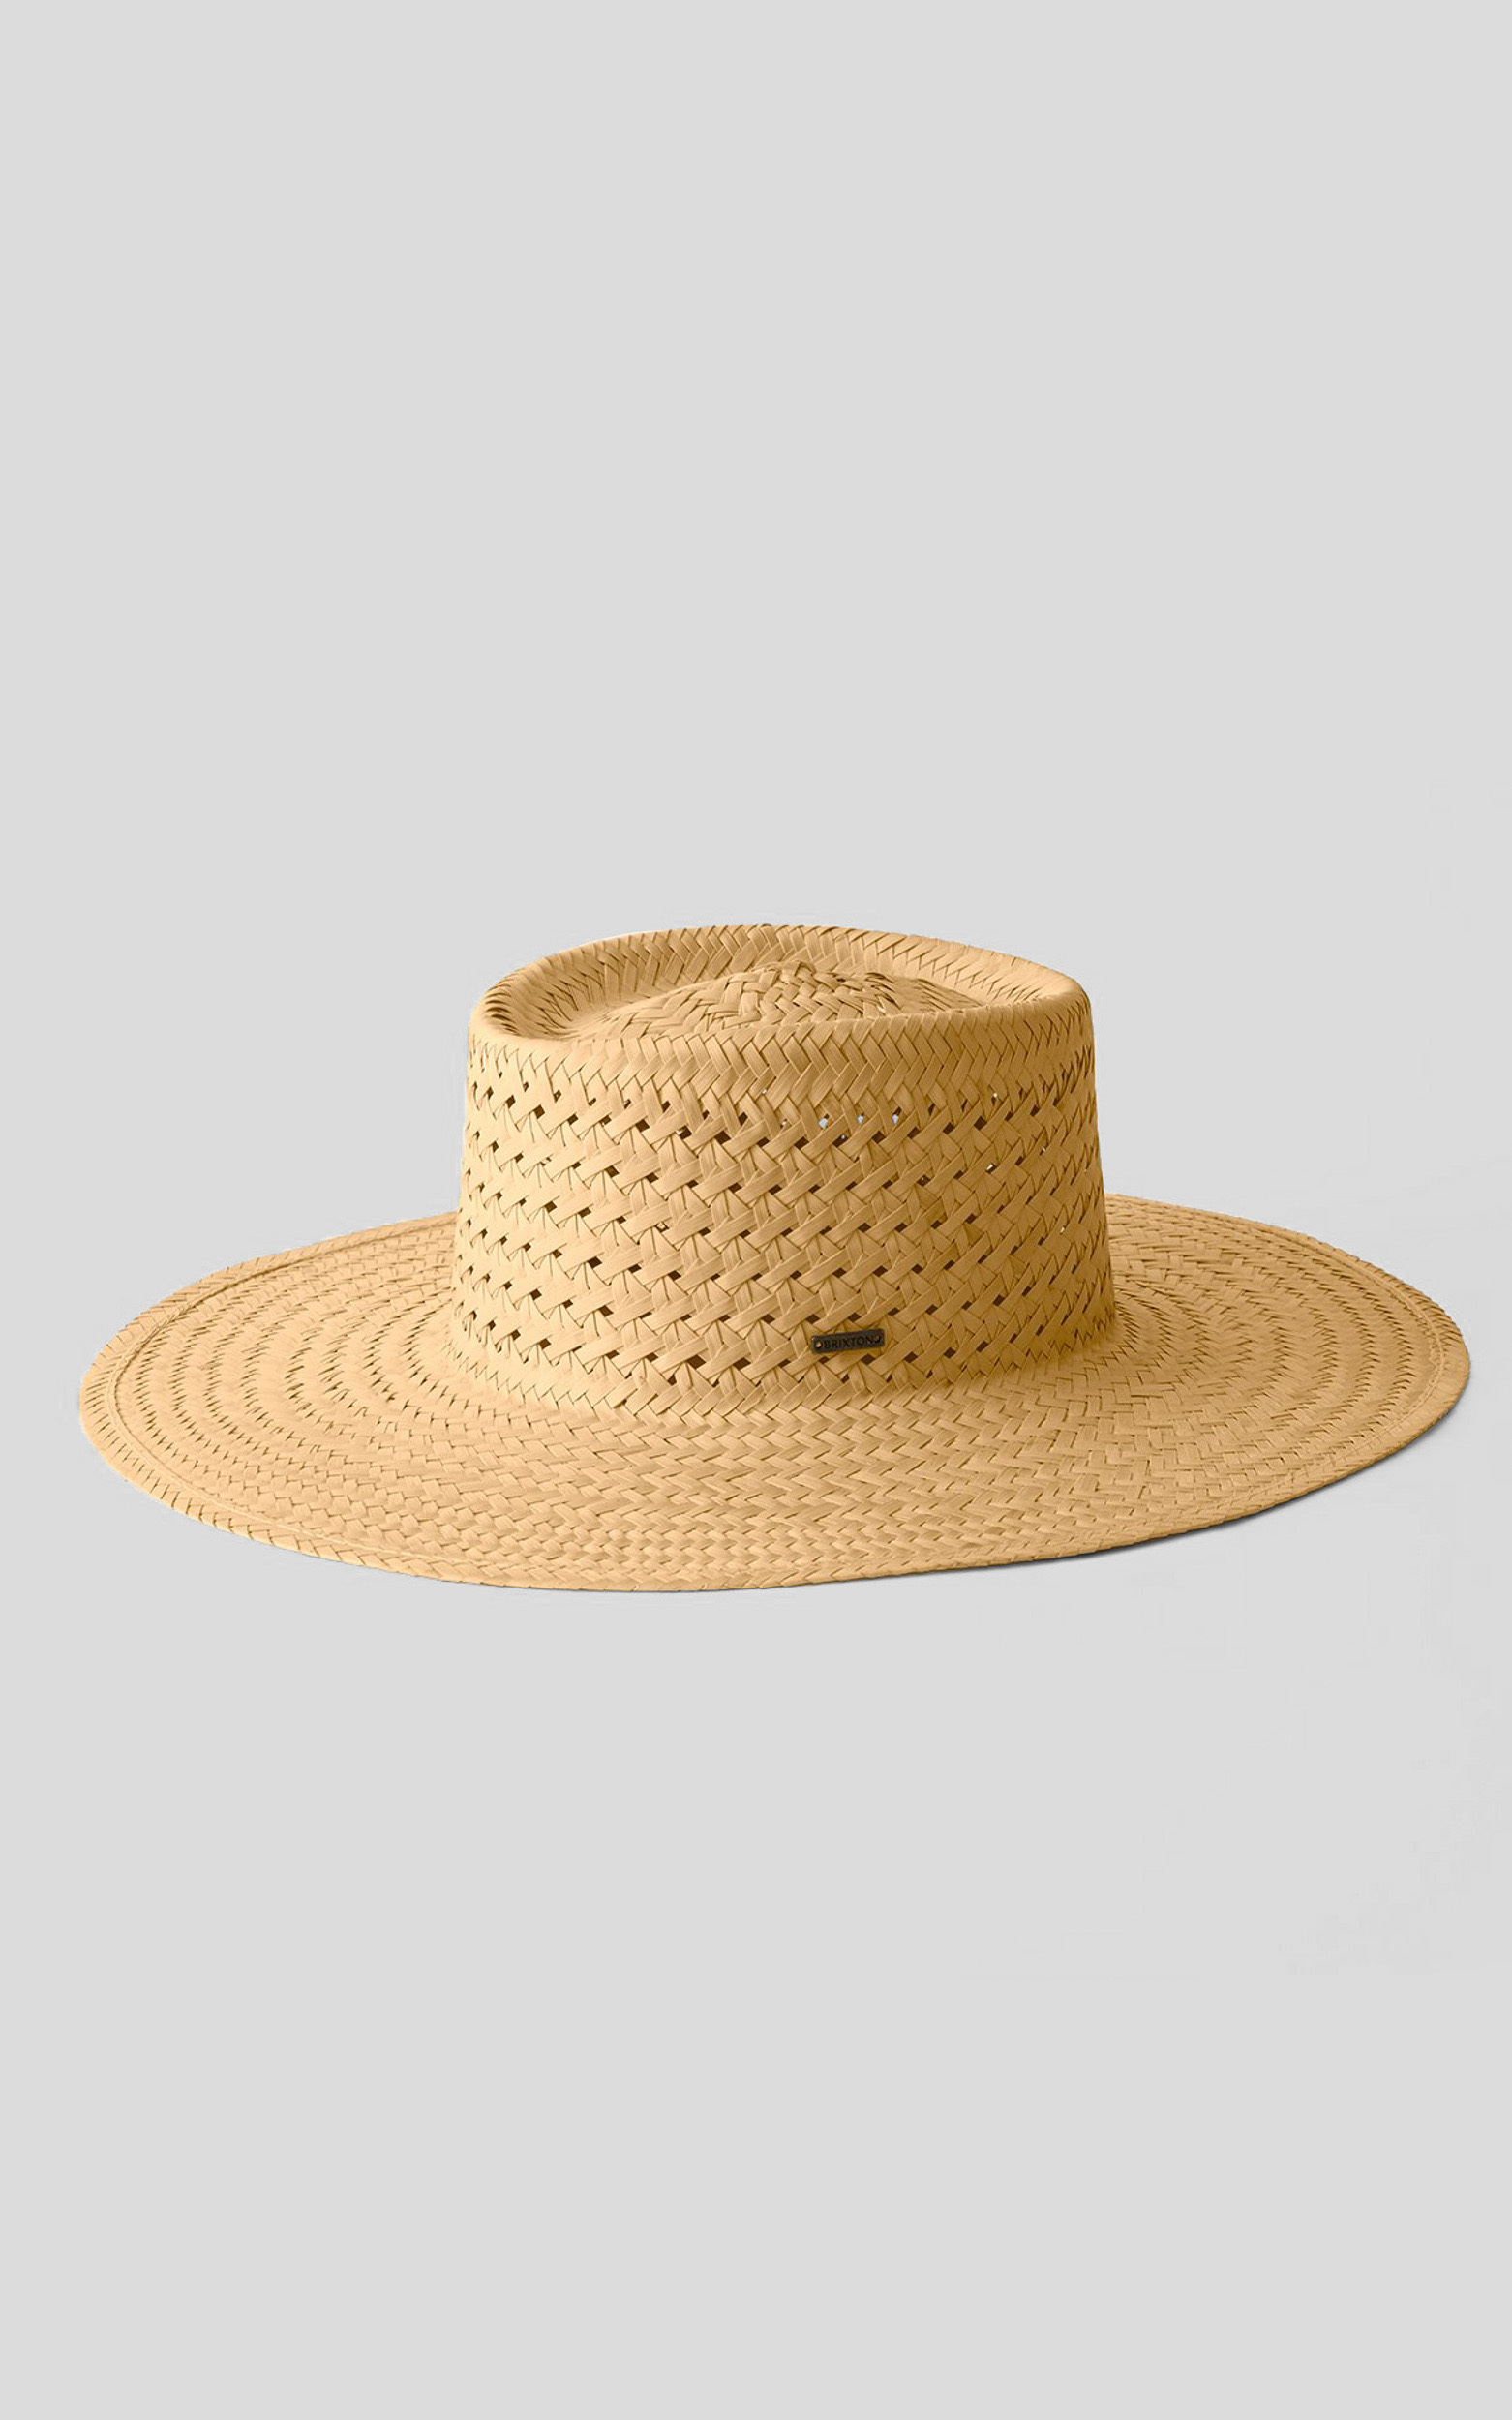 Brixton - Prairie Sun Hat in Natural - L/XL, BRN1, hi-res image number null